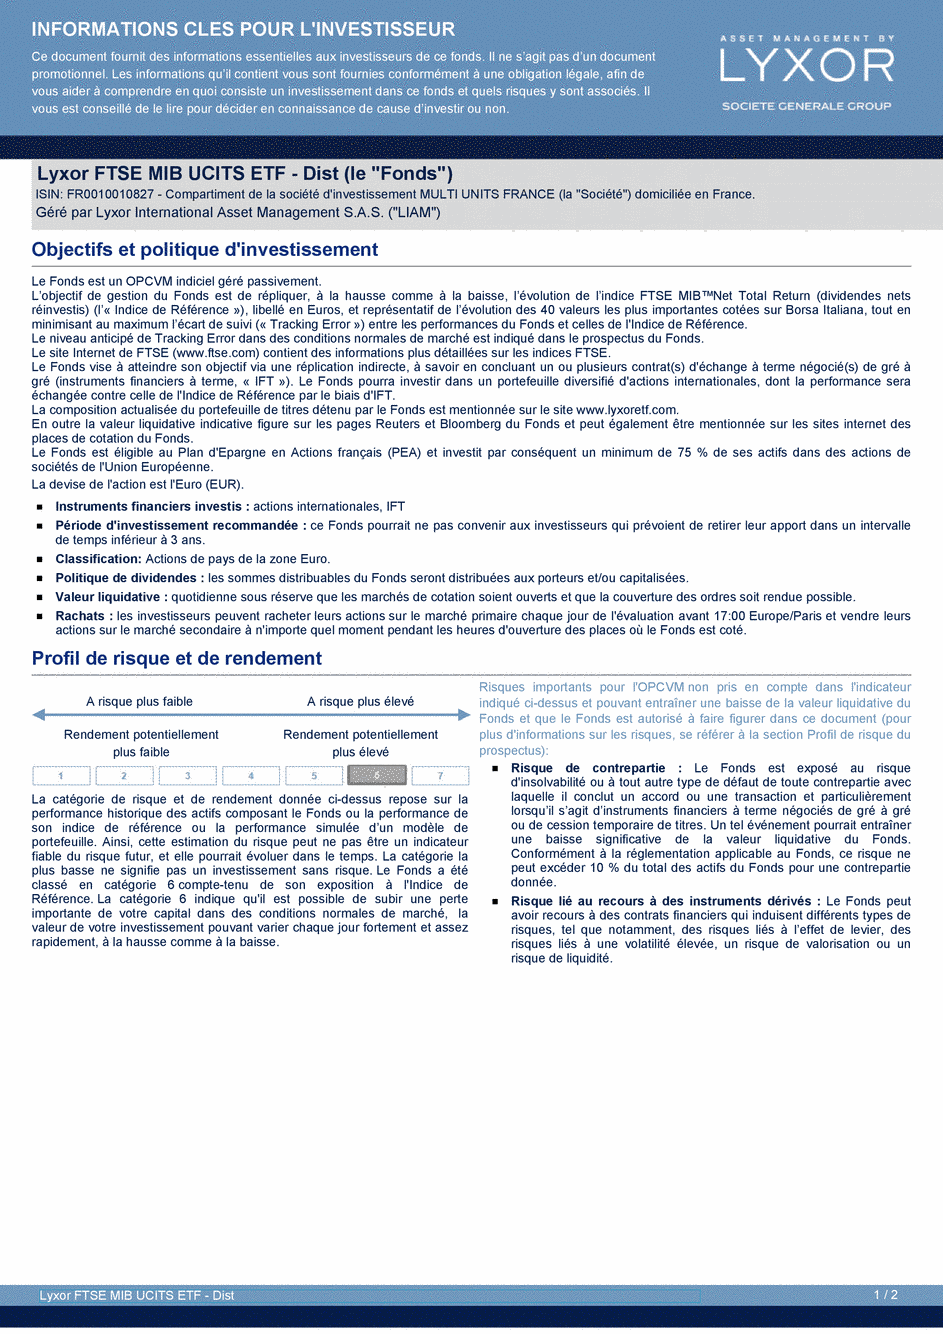 DICI Lyxor FTSE MIB UCITS ETF - Dist - 19/02/2021 - Français